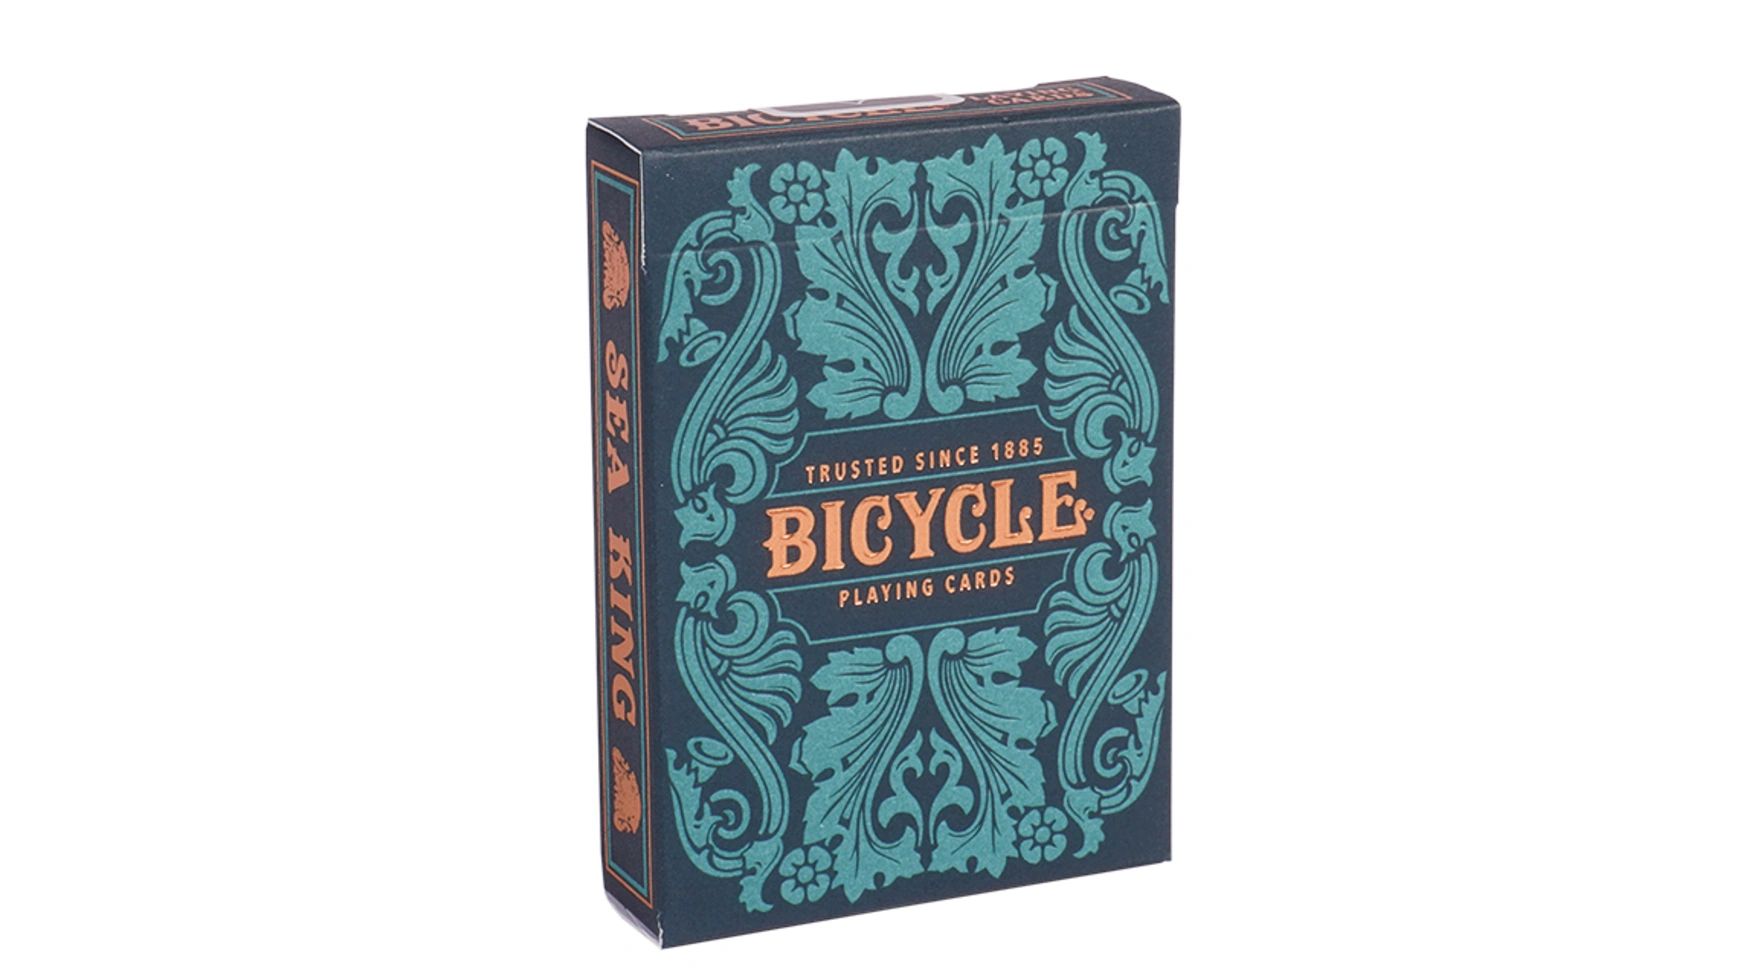 Bicycle Морской король, игральные карты игральные карты bicycle dark mode темный режим